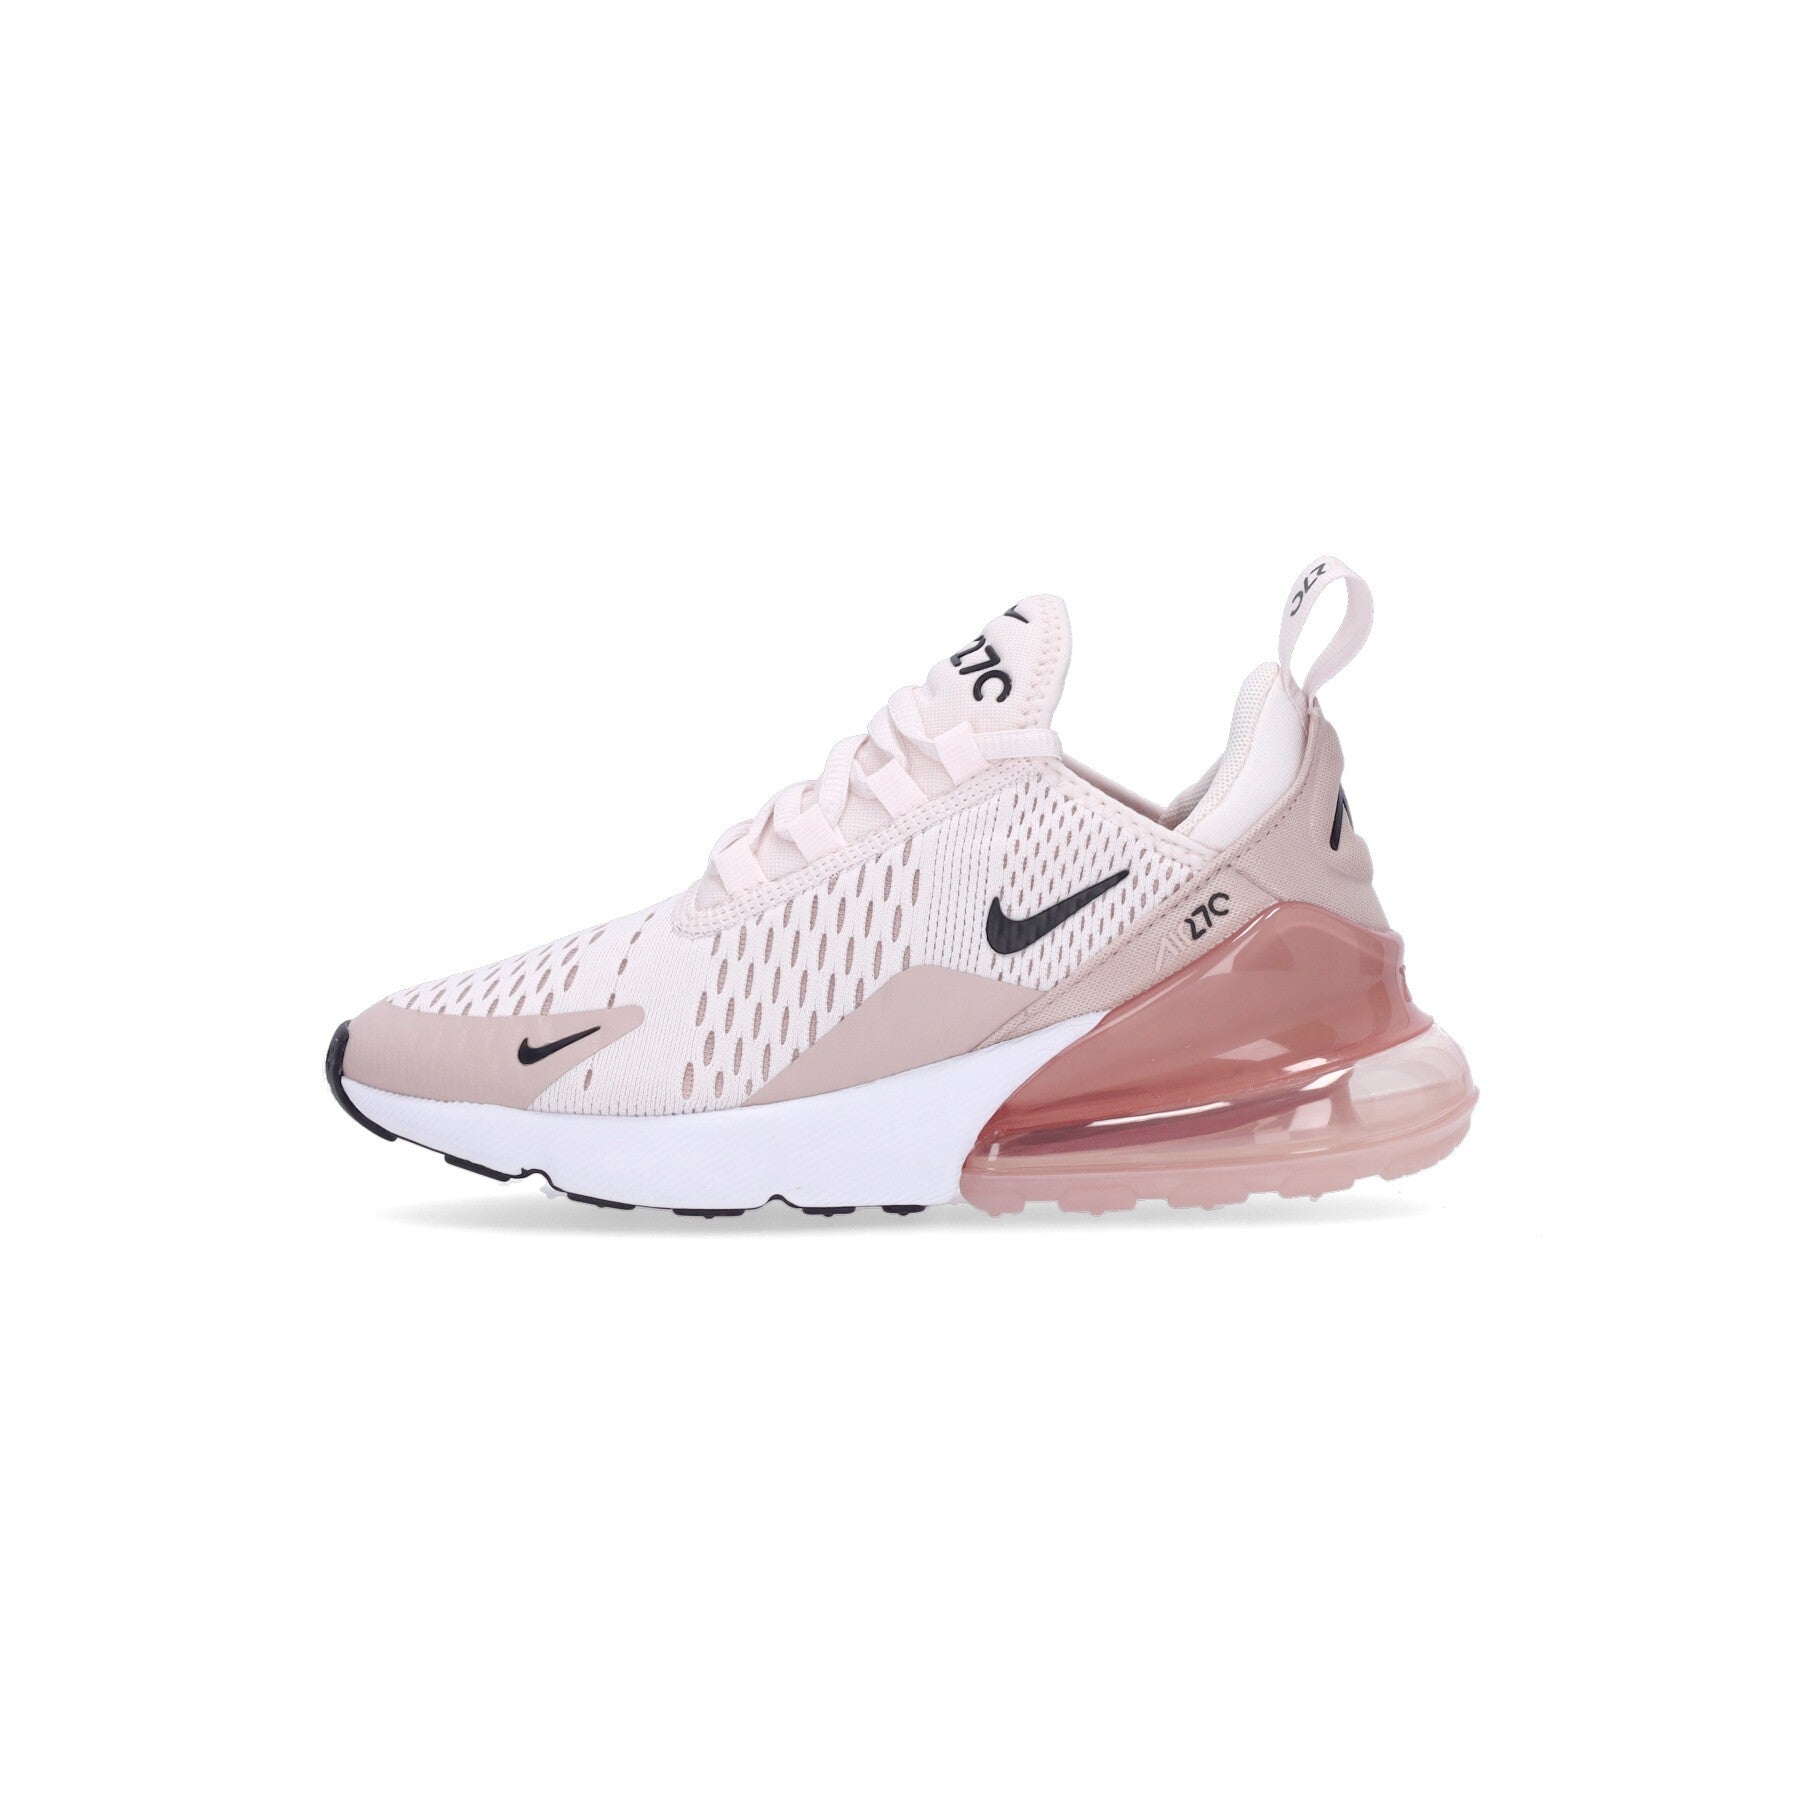 Nike, Scarpa Bassa Donna W Air Max 270, Light Soft Pink/black/pink Oxford